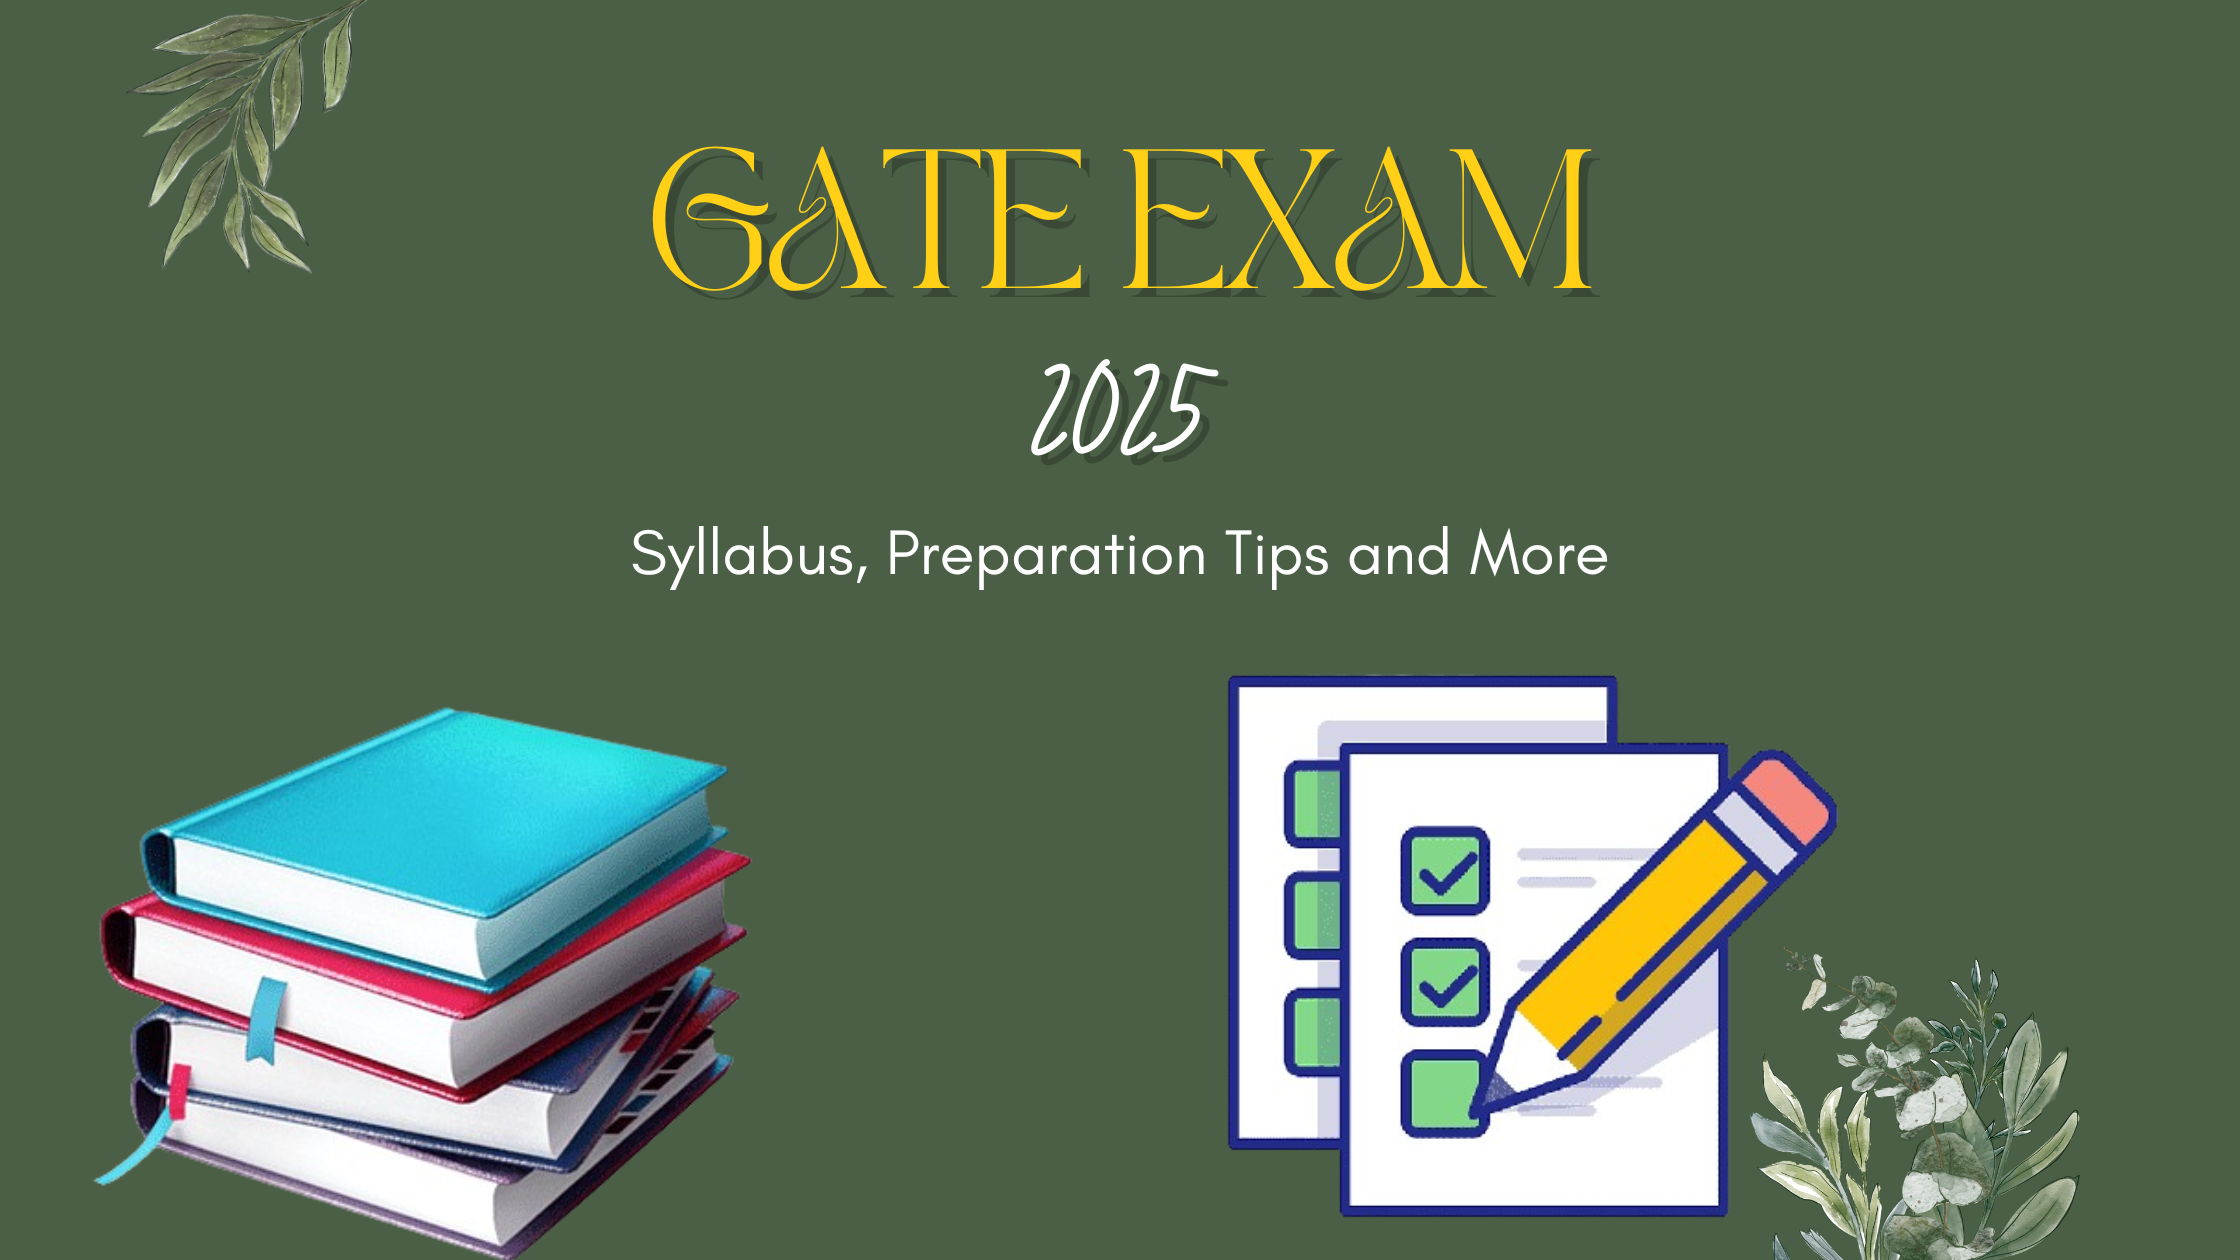 GATE Exam 2025